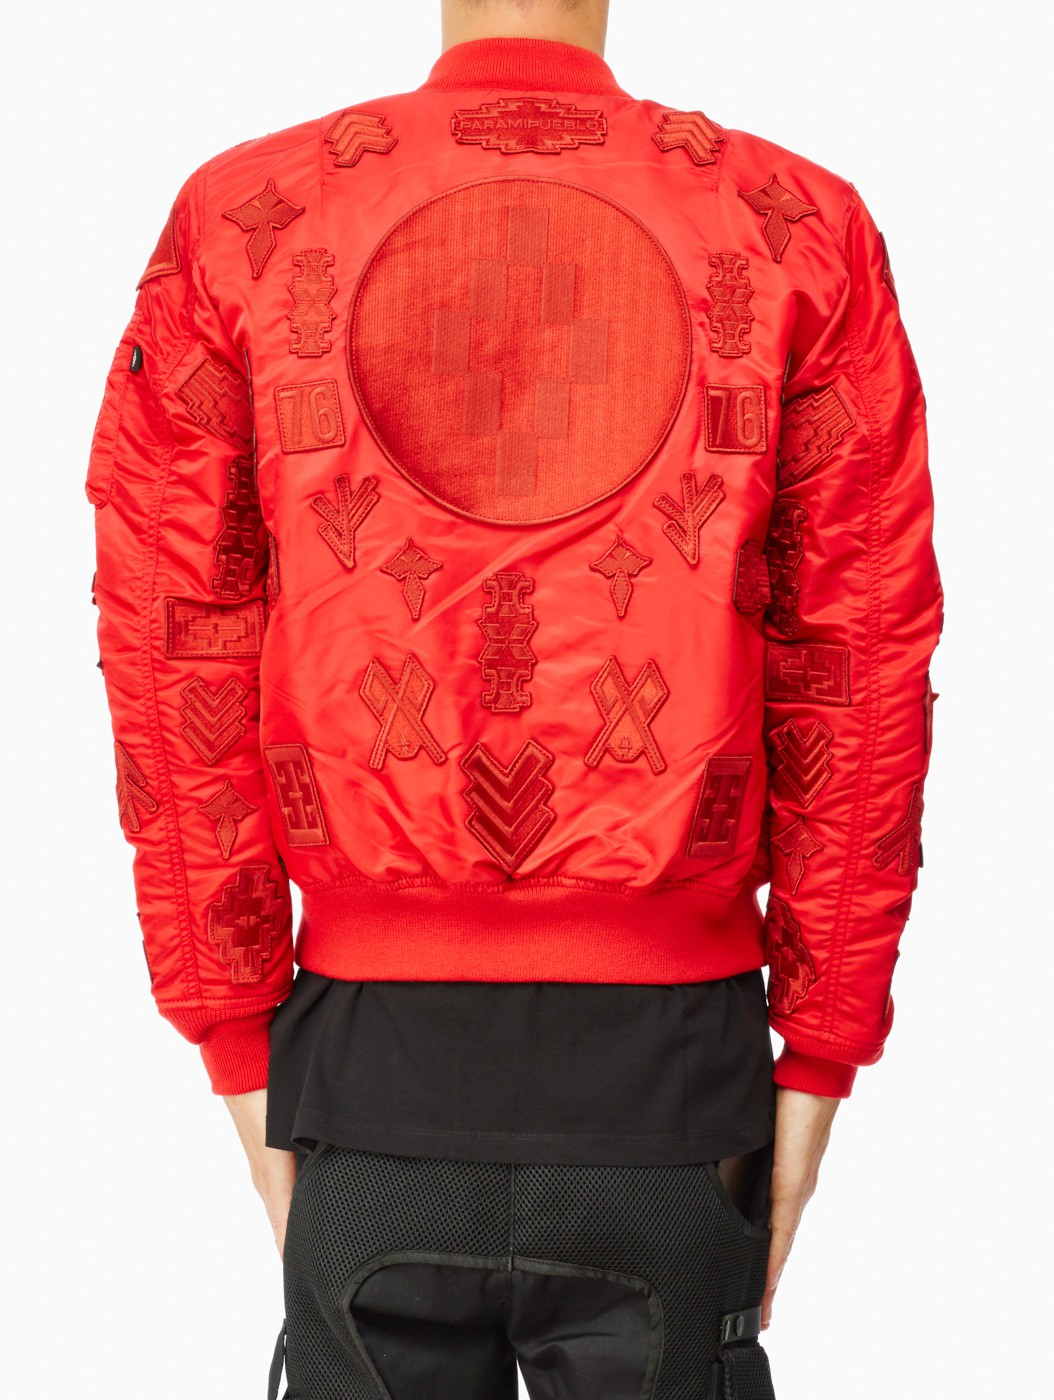 Lyst - Marcelo Burlon Alpha Jacket in Red for Men